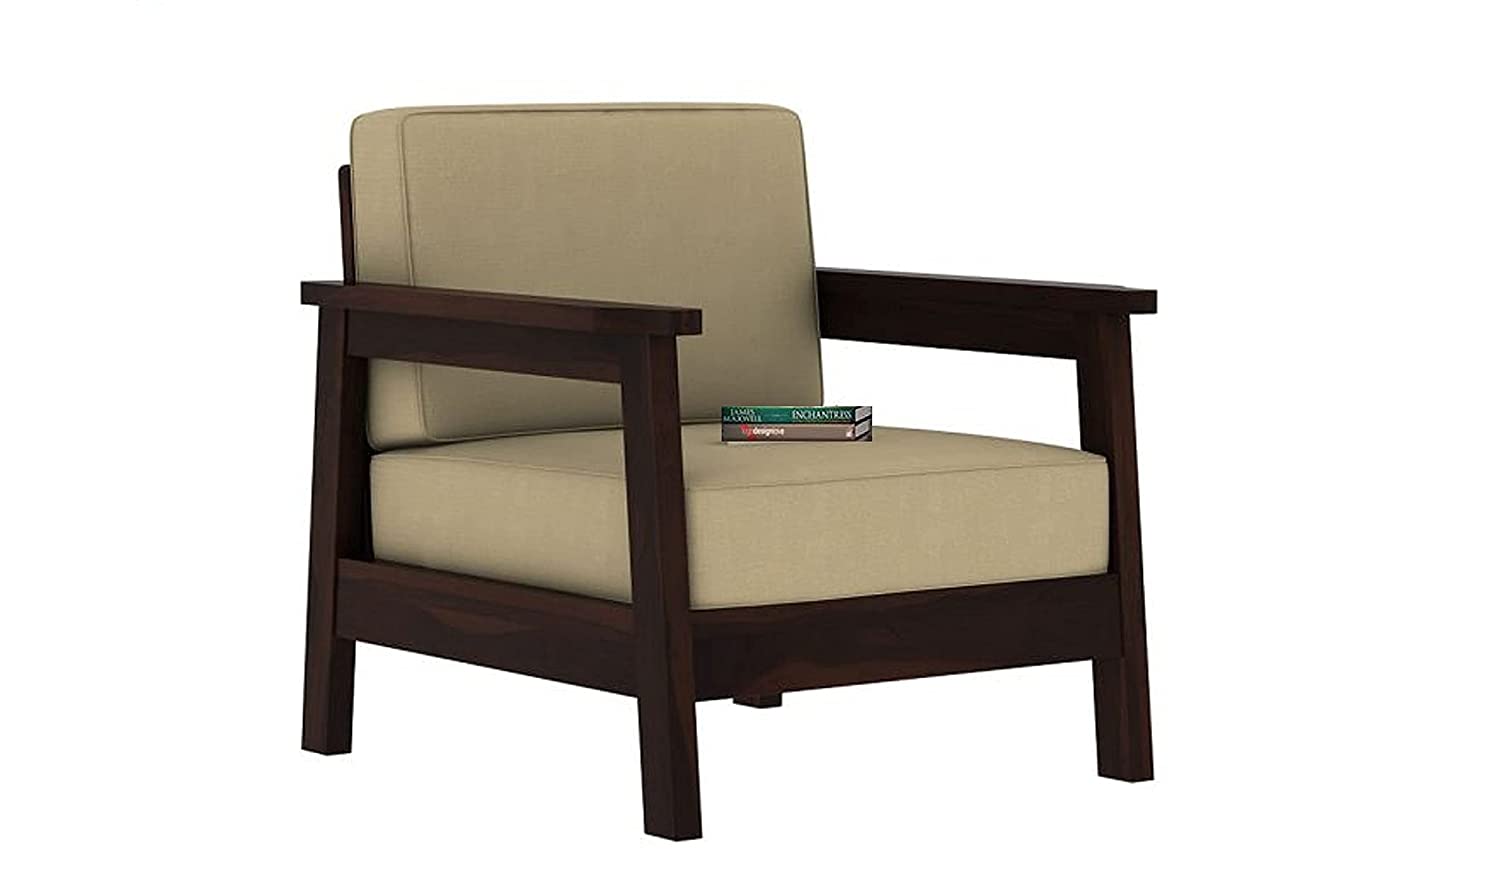 AD Planet Solid Wood Single Seater Sofa for Living Room | 1 Seater Sofa for Office & Lounge | Solid Wood, Walnut Finish Sofa 11